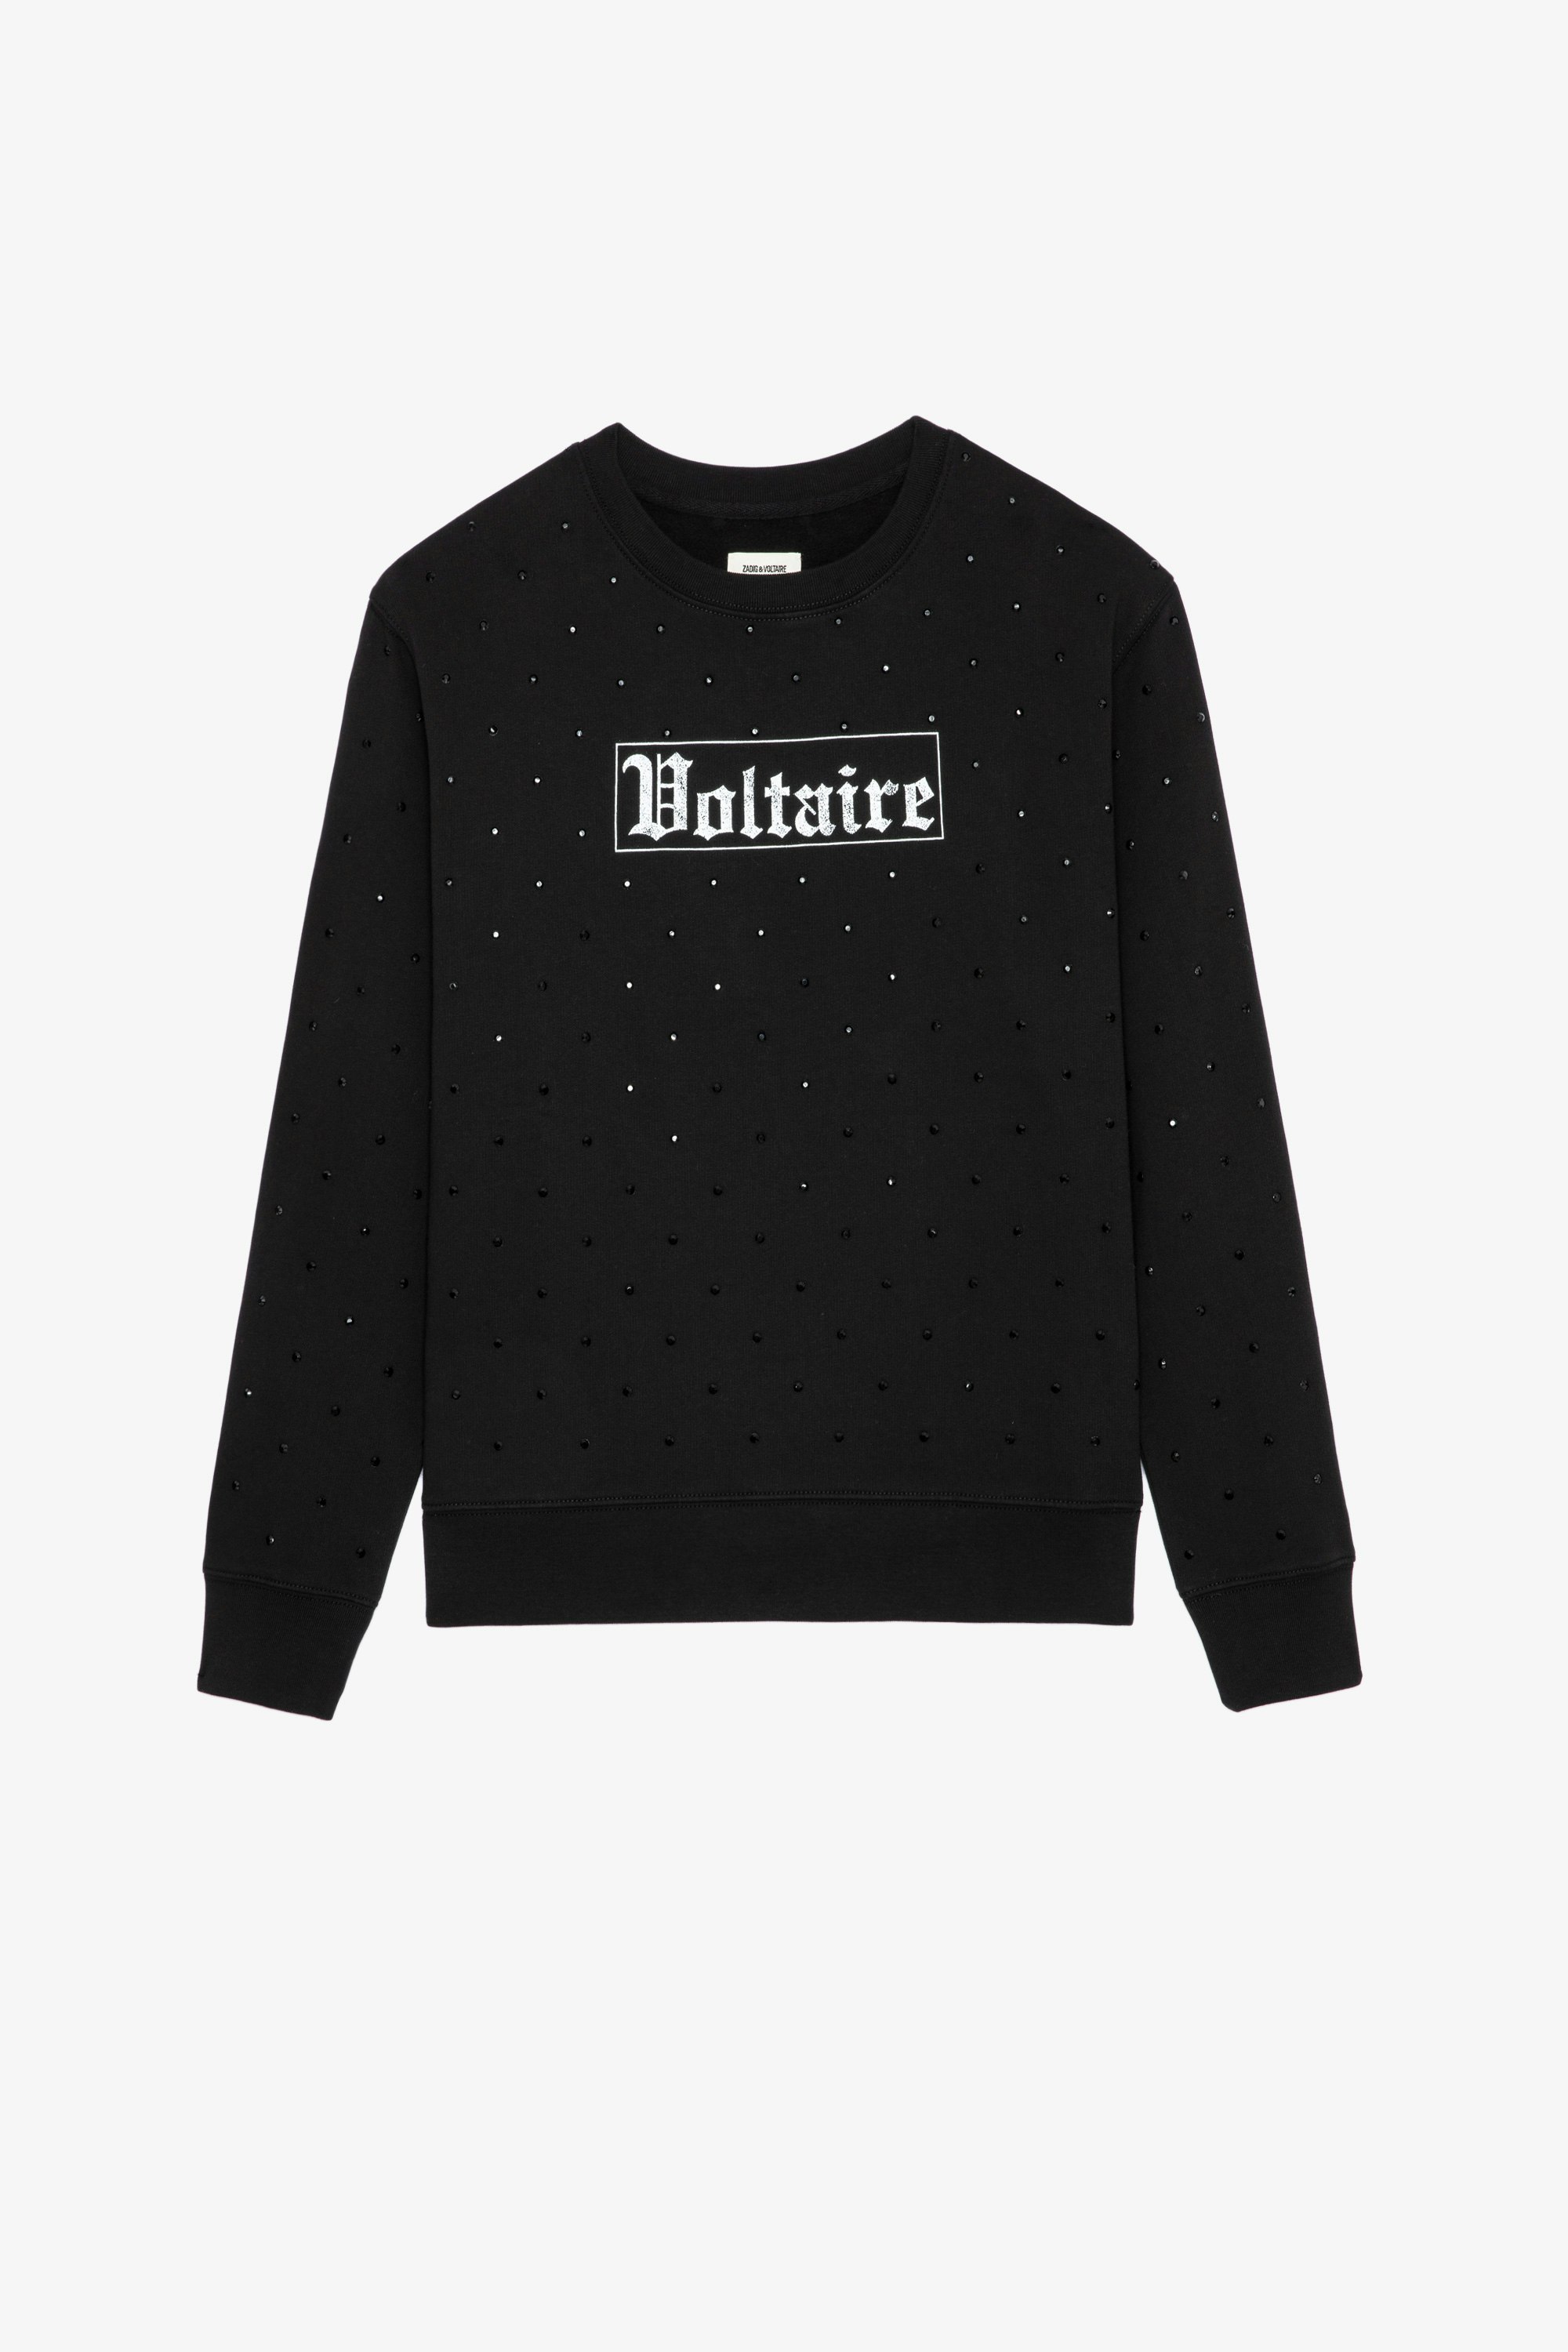 Nala Sweatshirt Women’s black cotton sweatshirt with rhinestones and Voltaire signature